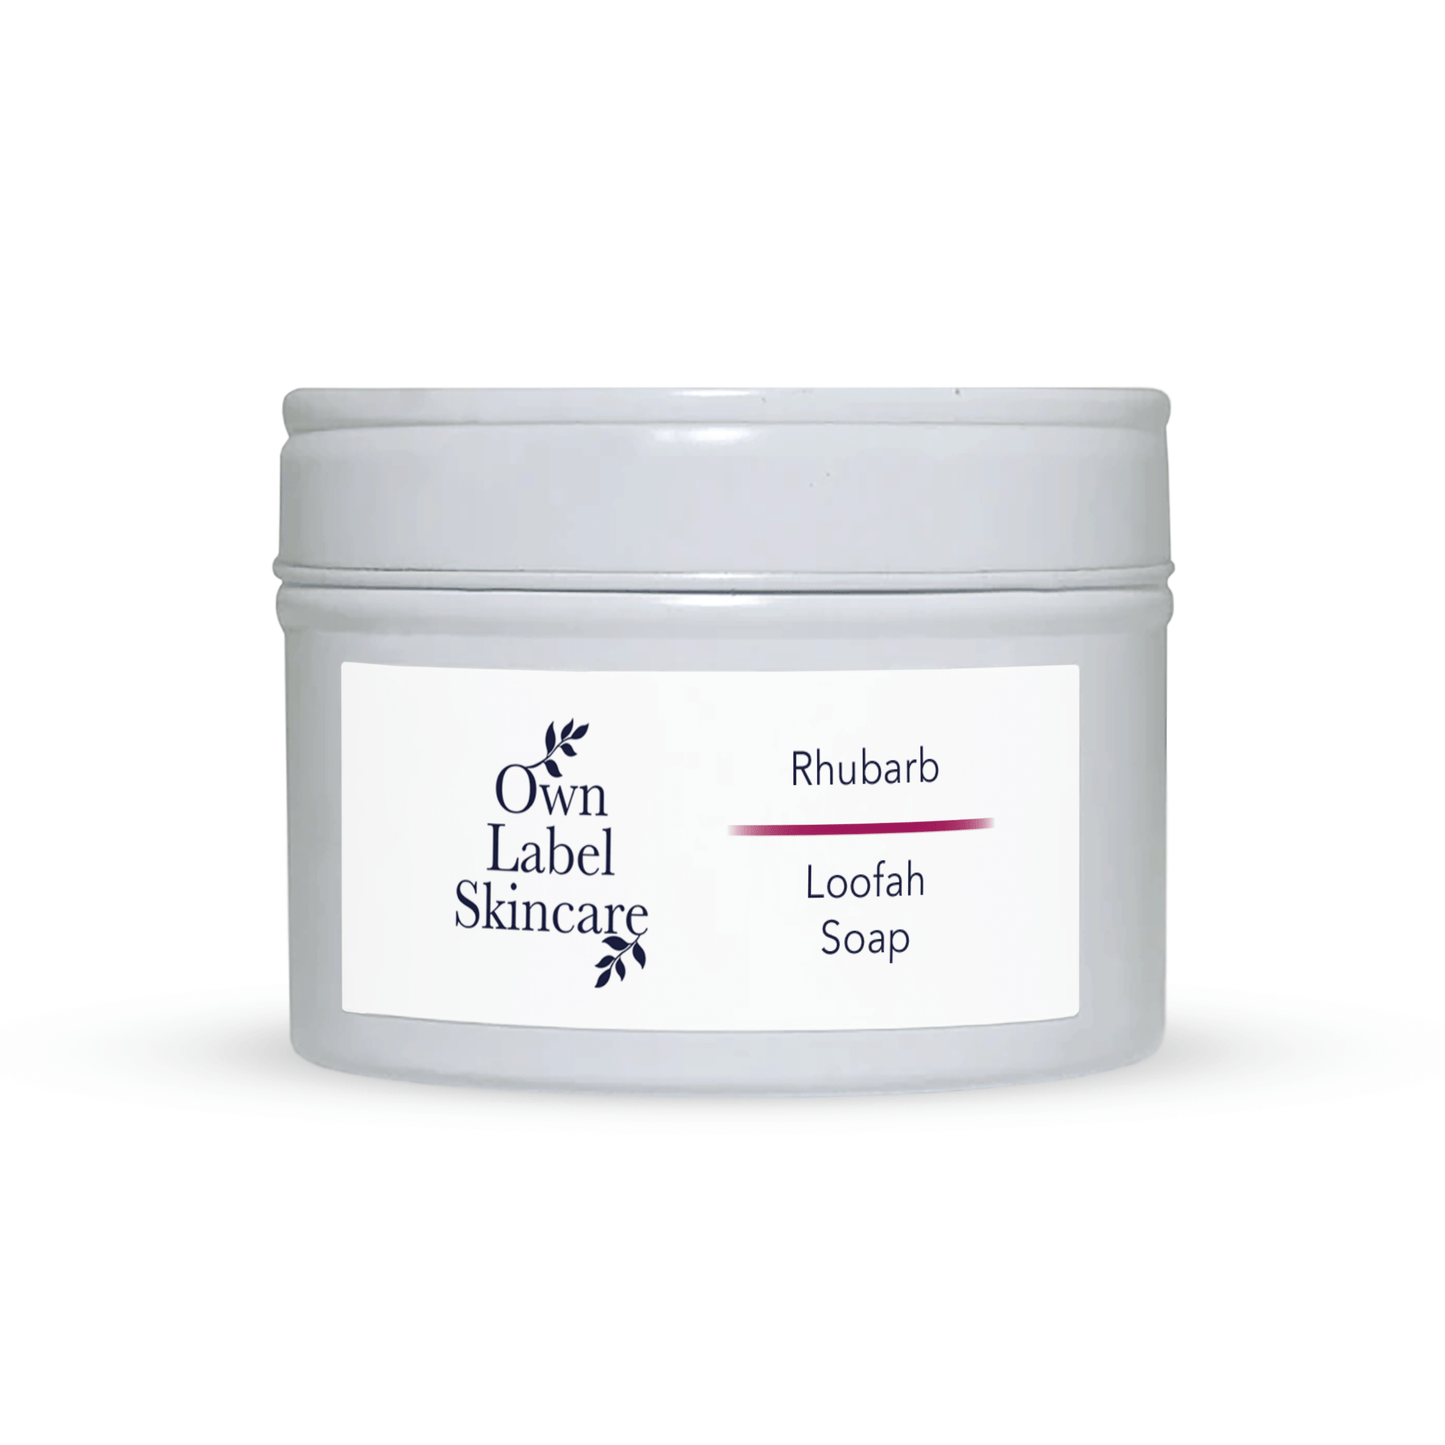 Rhubarb & Hempseed Loofah Soap | White Label Skincare